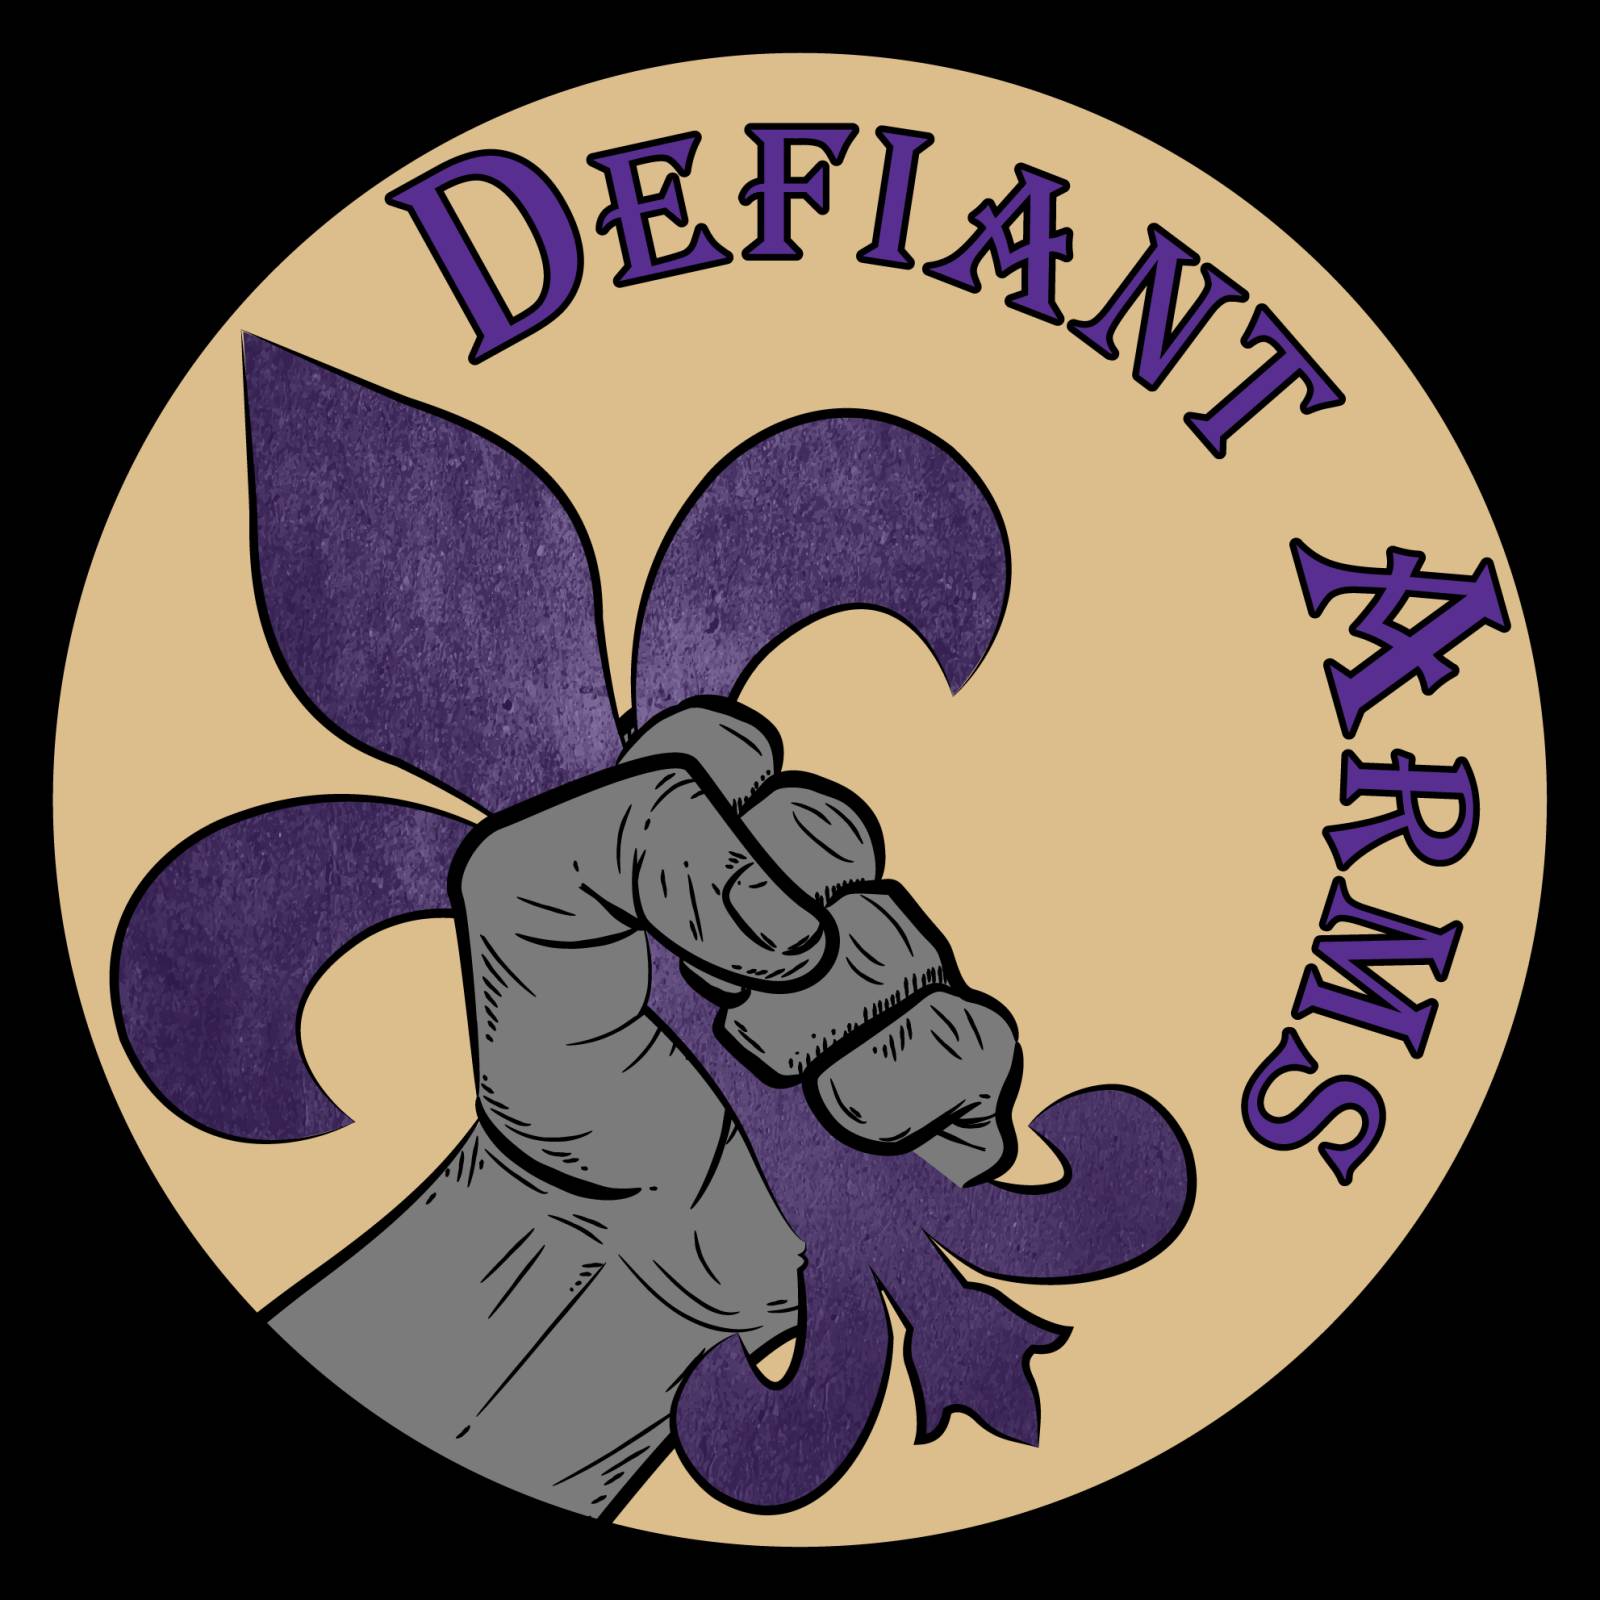 Defiant Arms